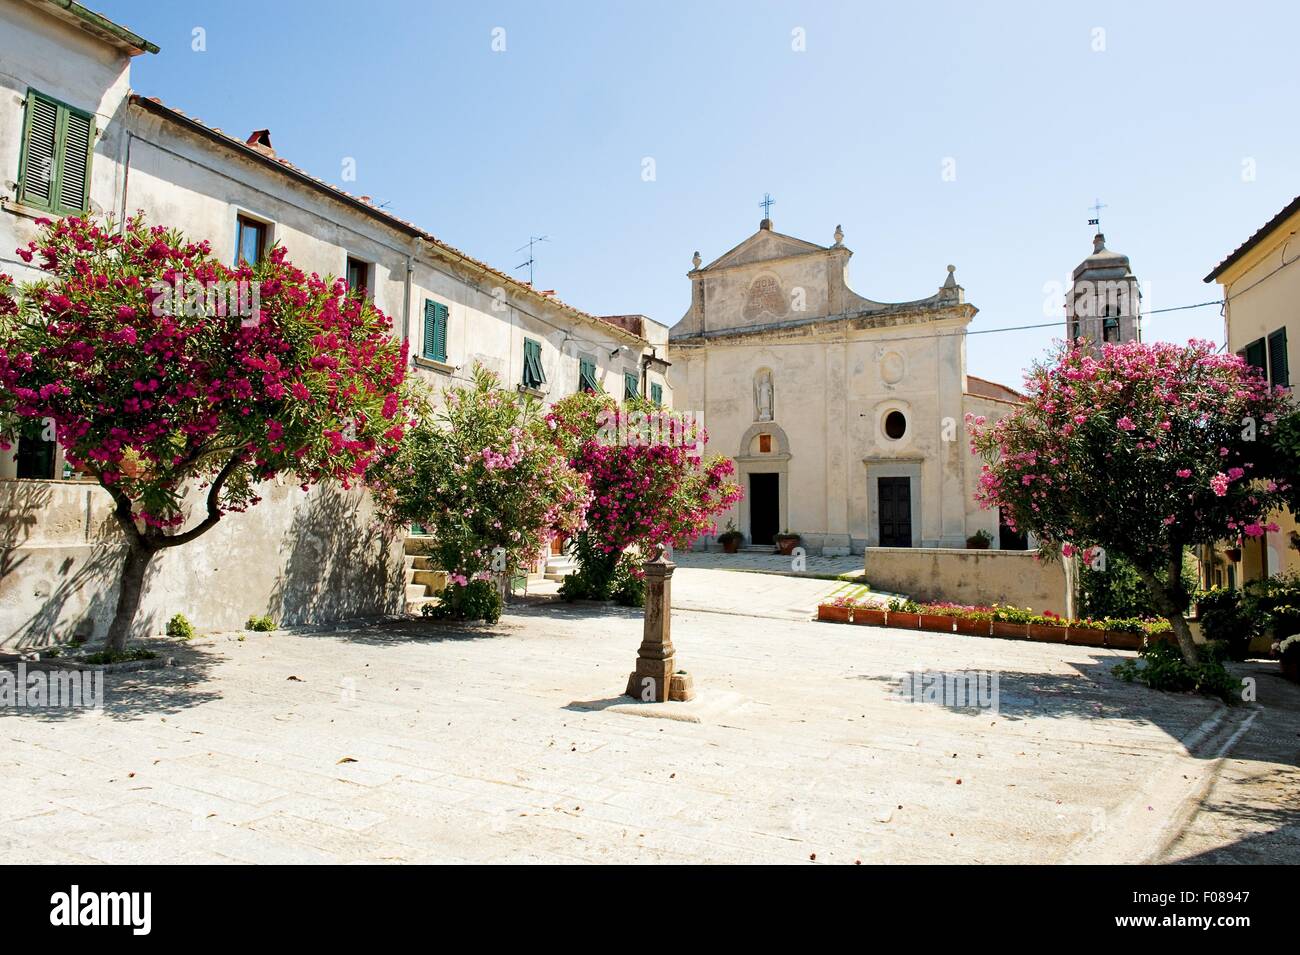 Facade of Sant'ilario with flowering shrubs in San Polo d'Enza, Tuscany, Italy Stock Photo